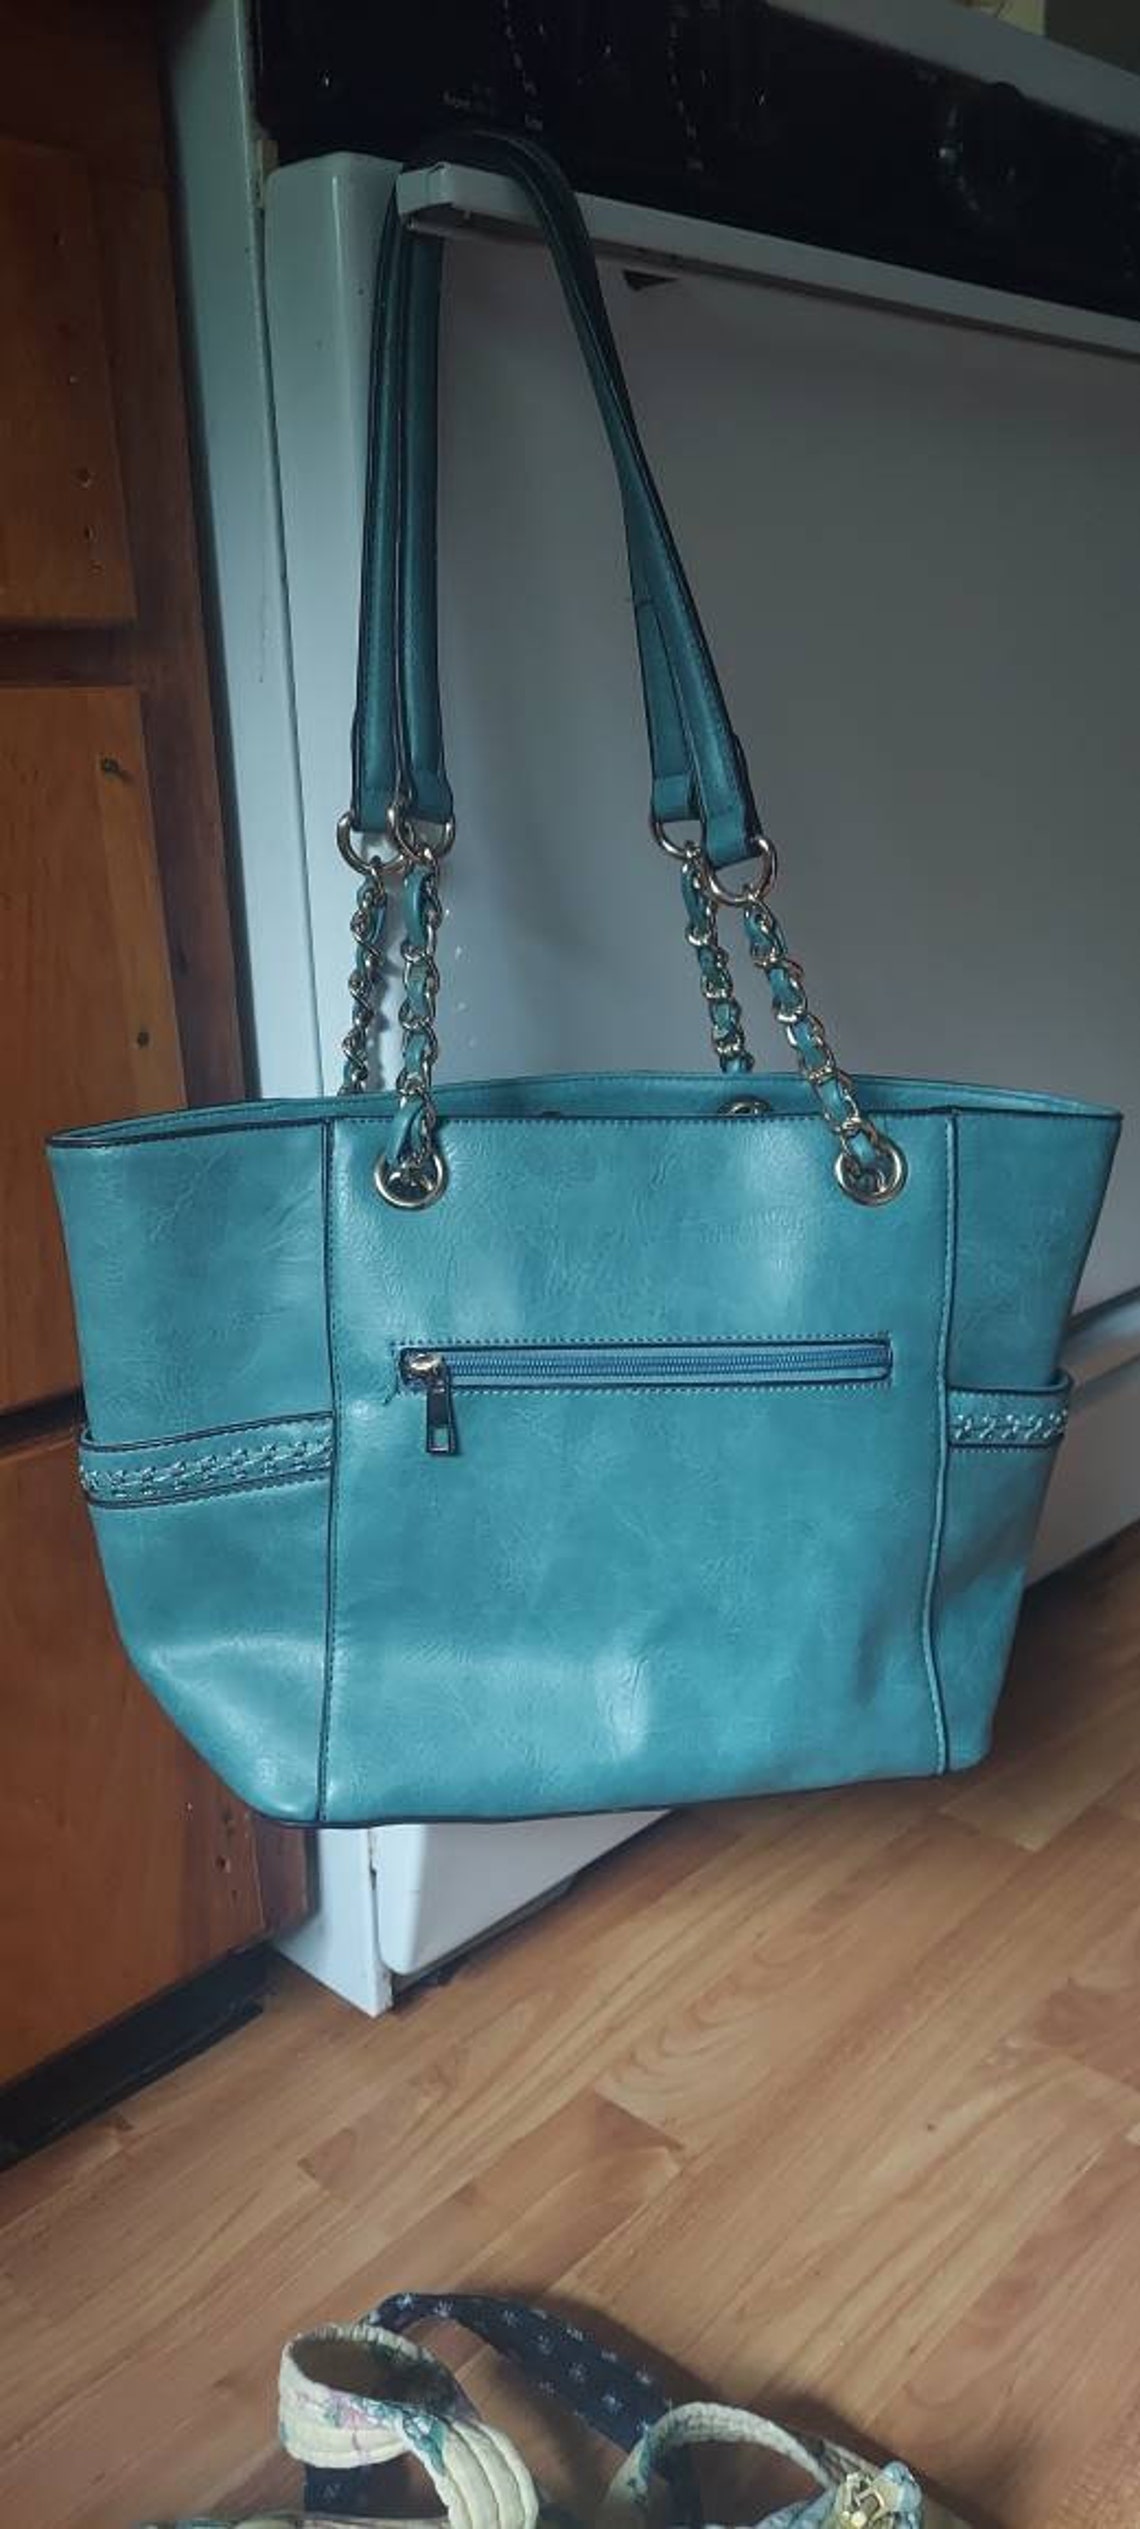 Robin egg blue leather bag/purse. Turquoise | Etsy